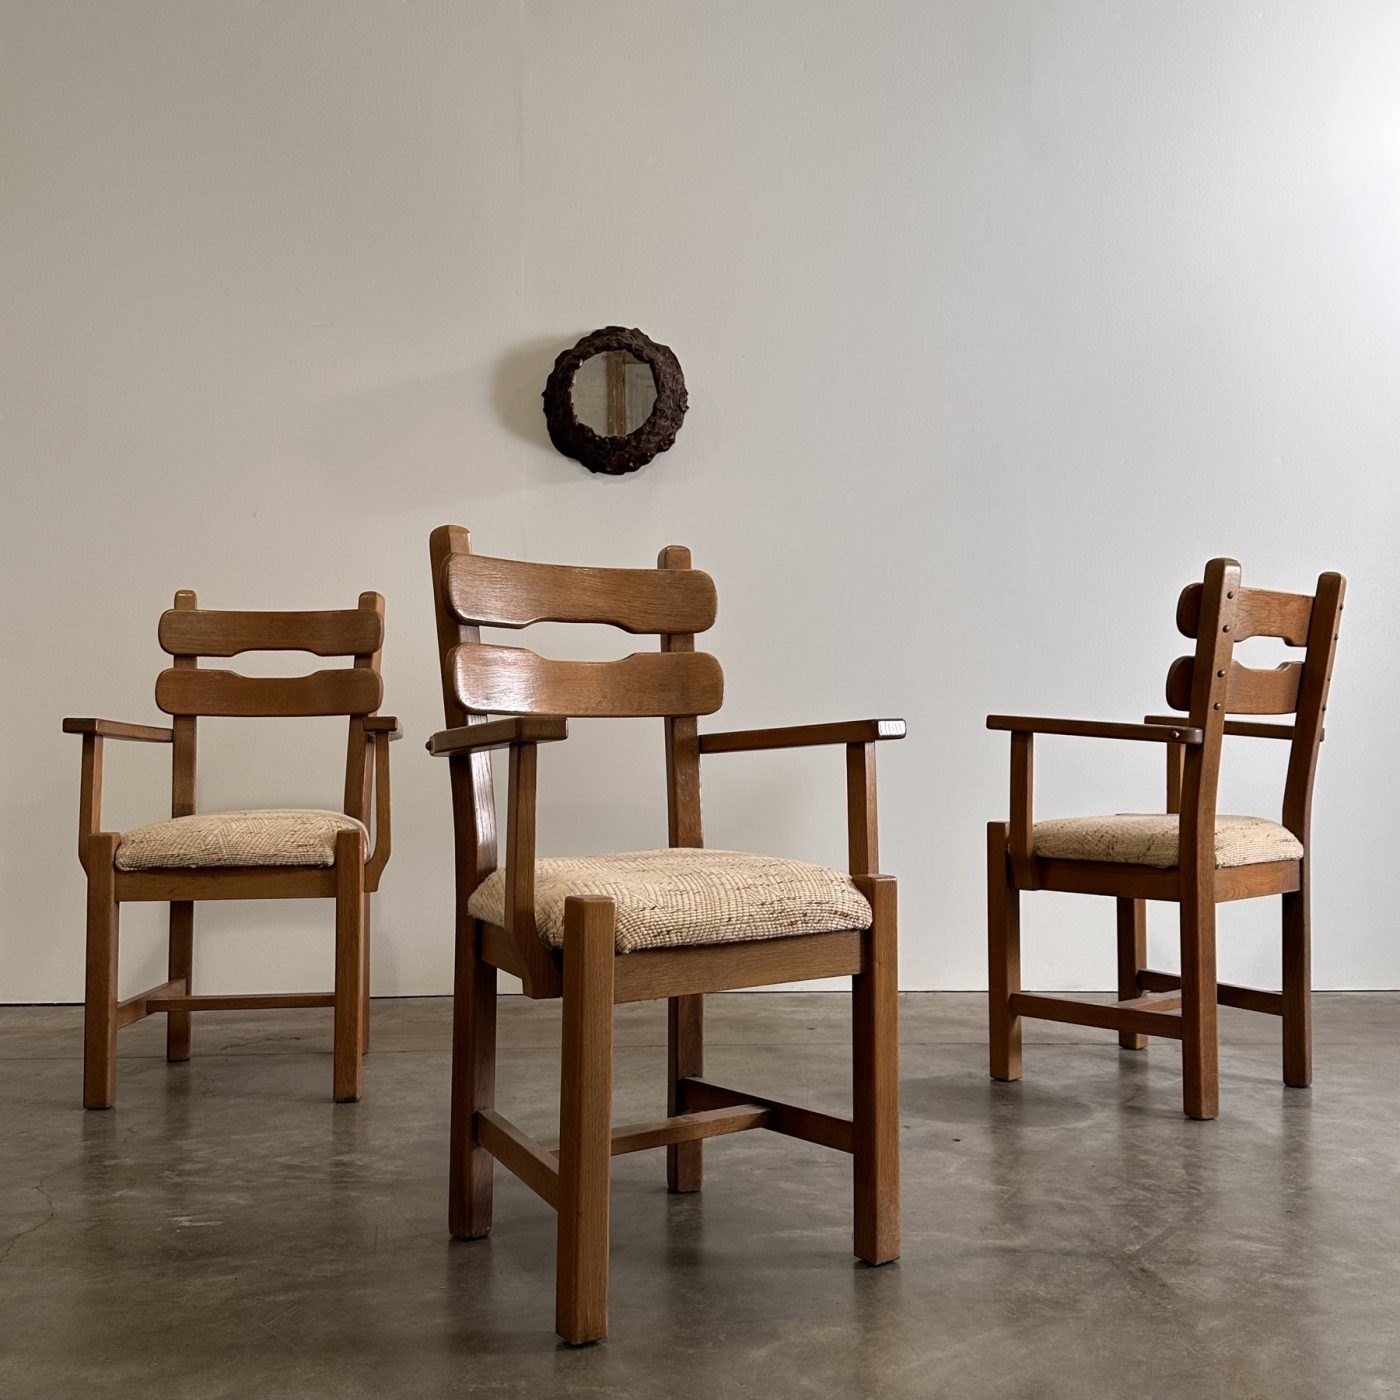 objet-vagabond-brutalist-armchairs0004